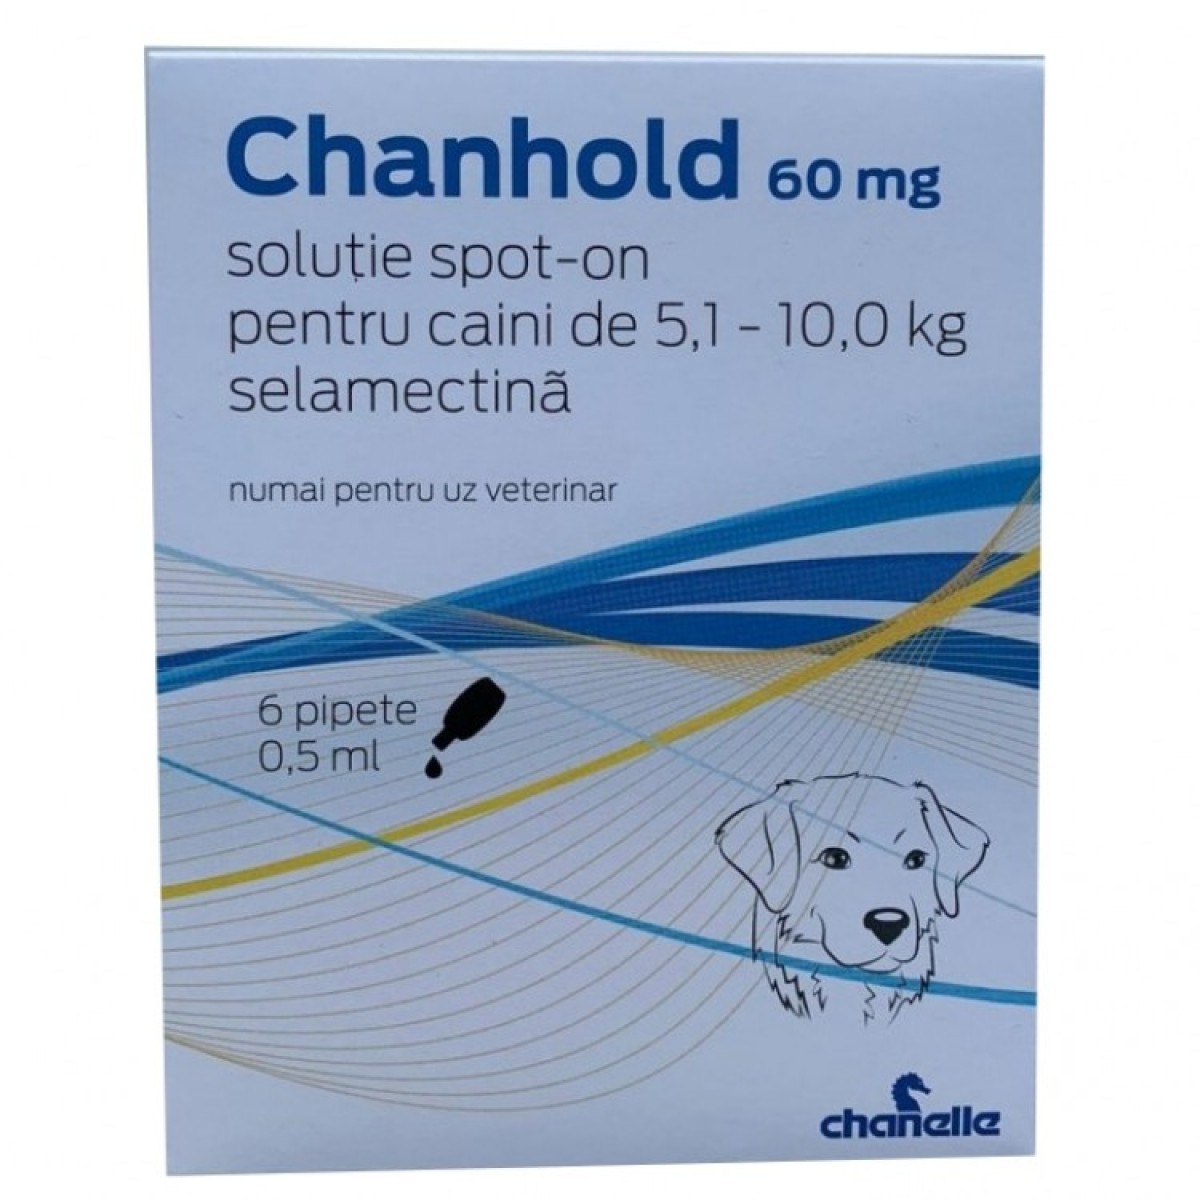 Chanhold 60 mg pentru câini între 5 - 10 kg 6 pipete antiparazitare, Antiparazitare externe, Antiparazitare, Câini 